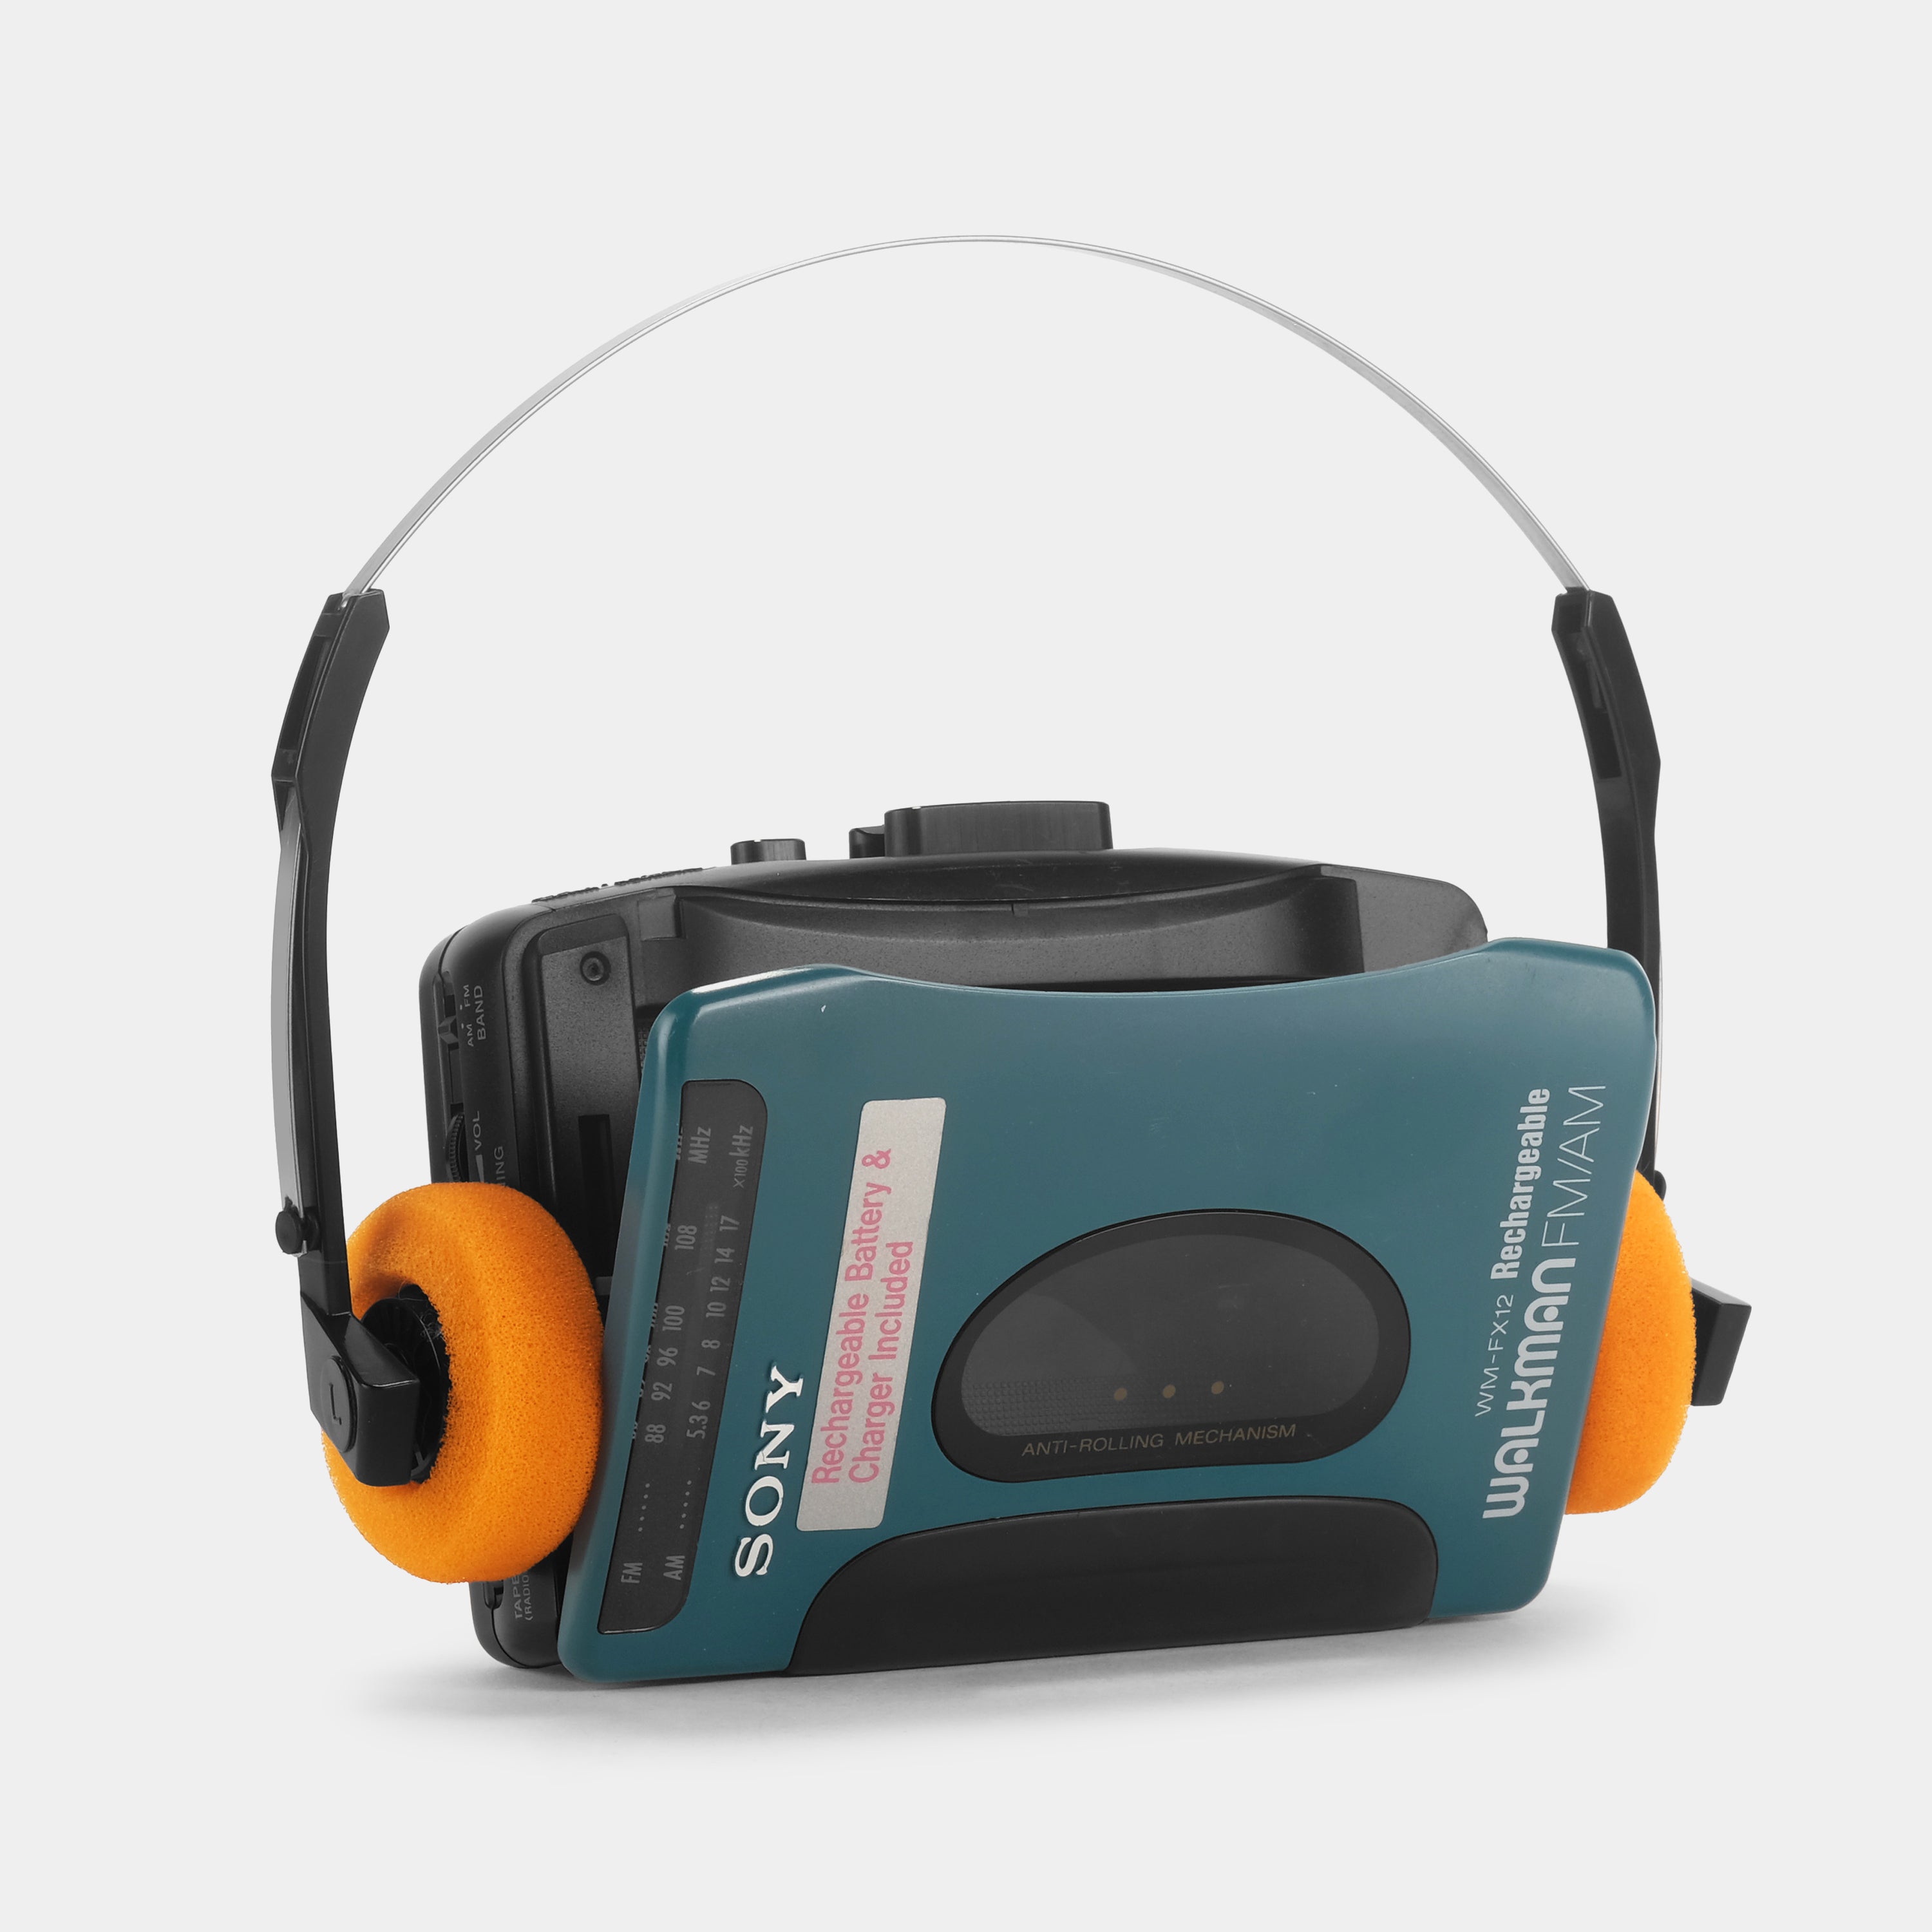 Sony Walkman WM-FX12 AM/FM Teal Portable Cassette Player